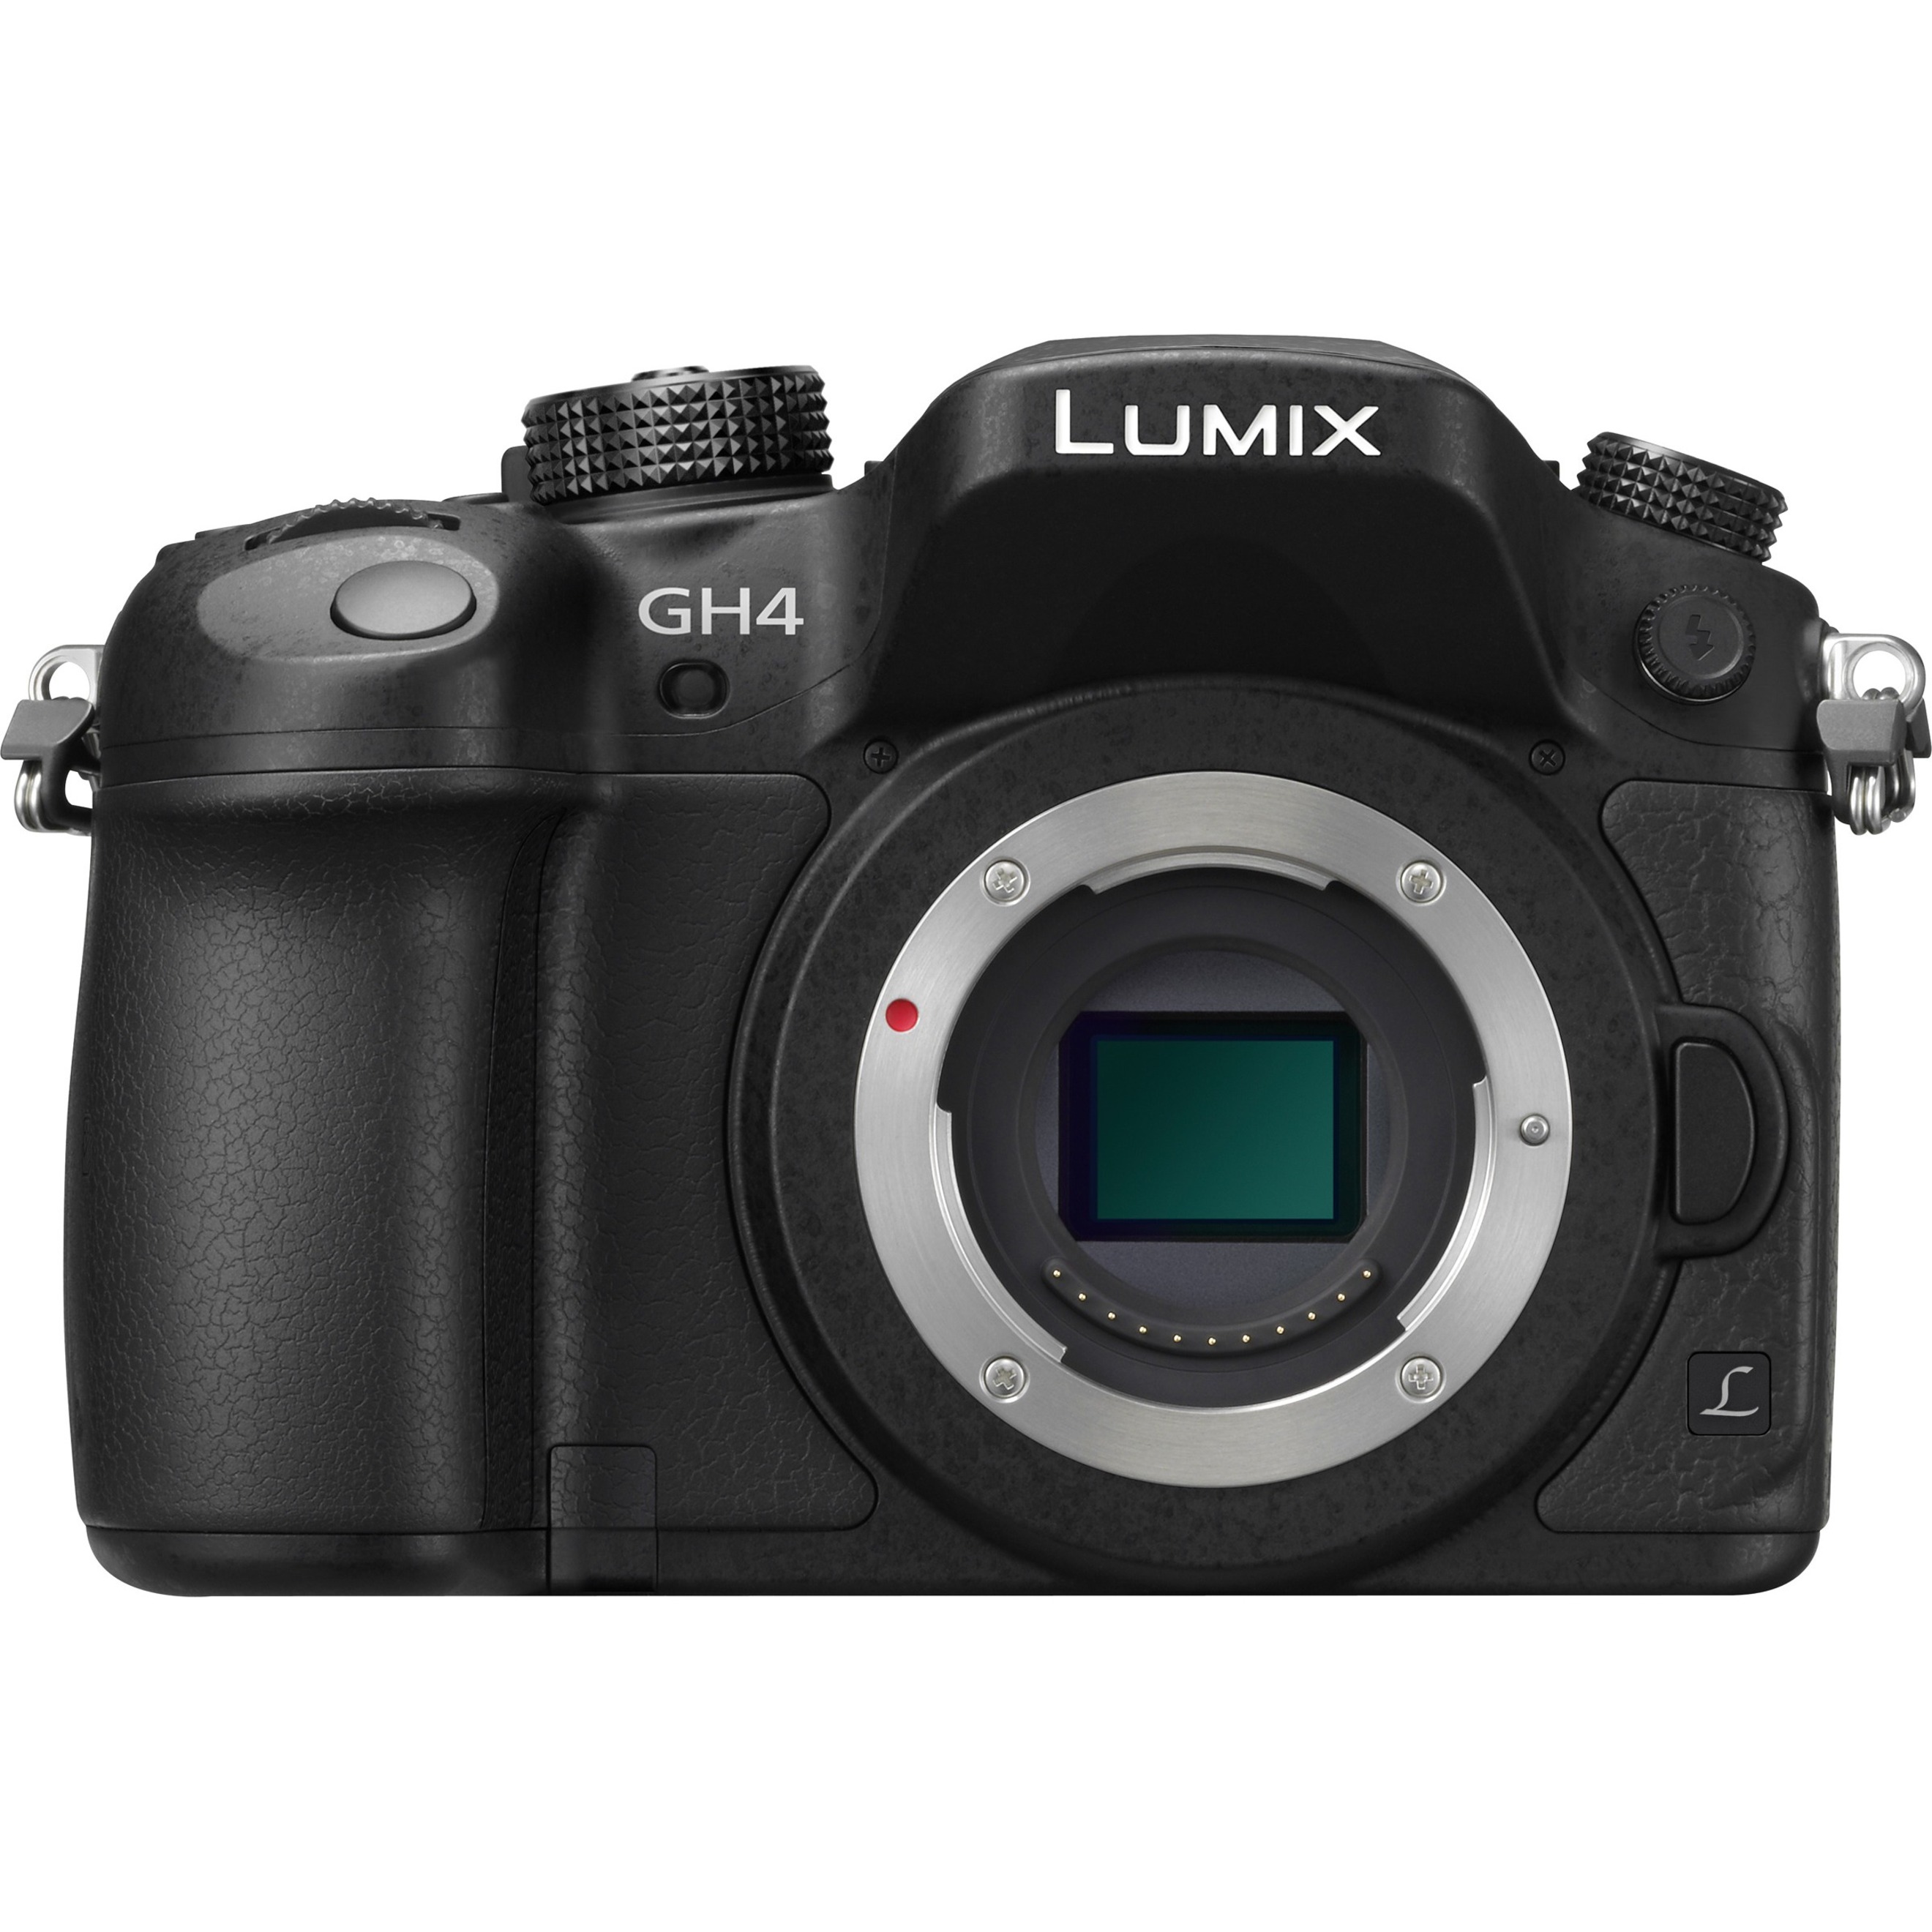 Panasonic Lumix DMC-GH4 16.1 Megapixel Mirrorless Camera with Lens, Black - image 1 of 7